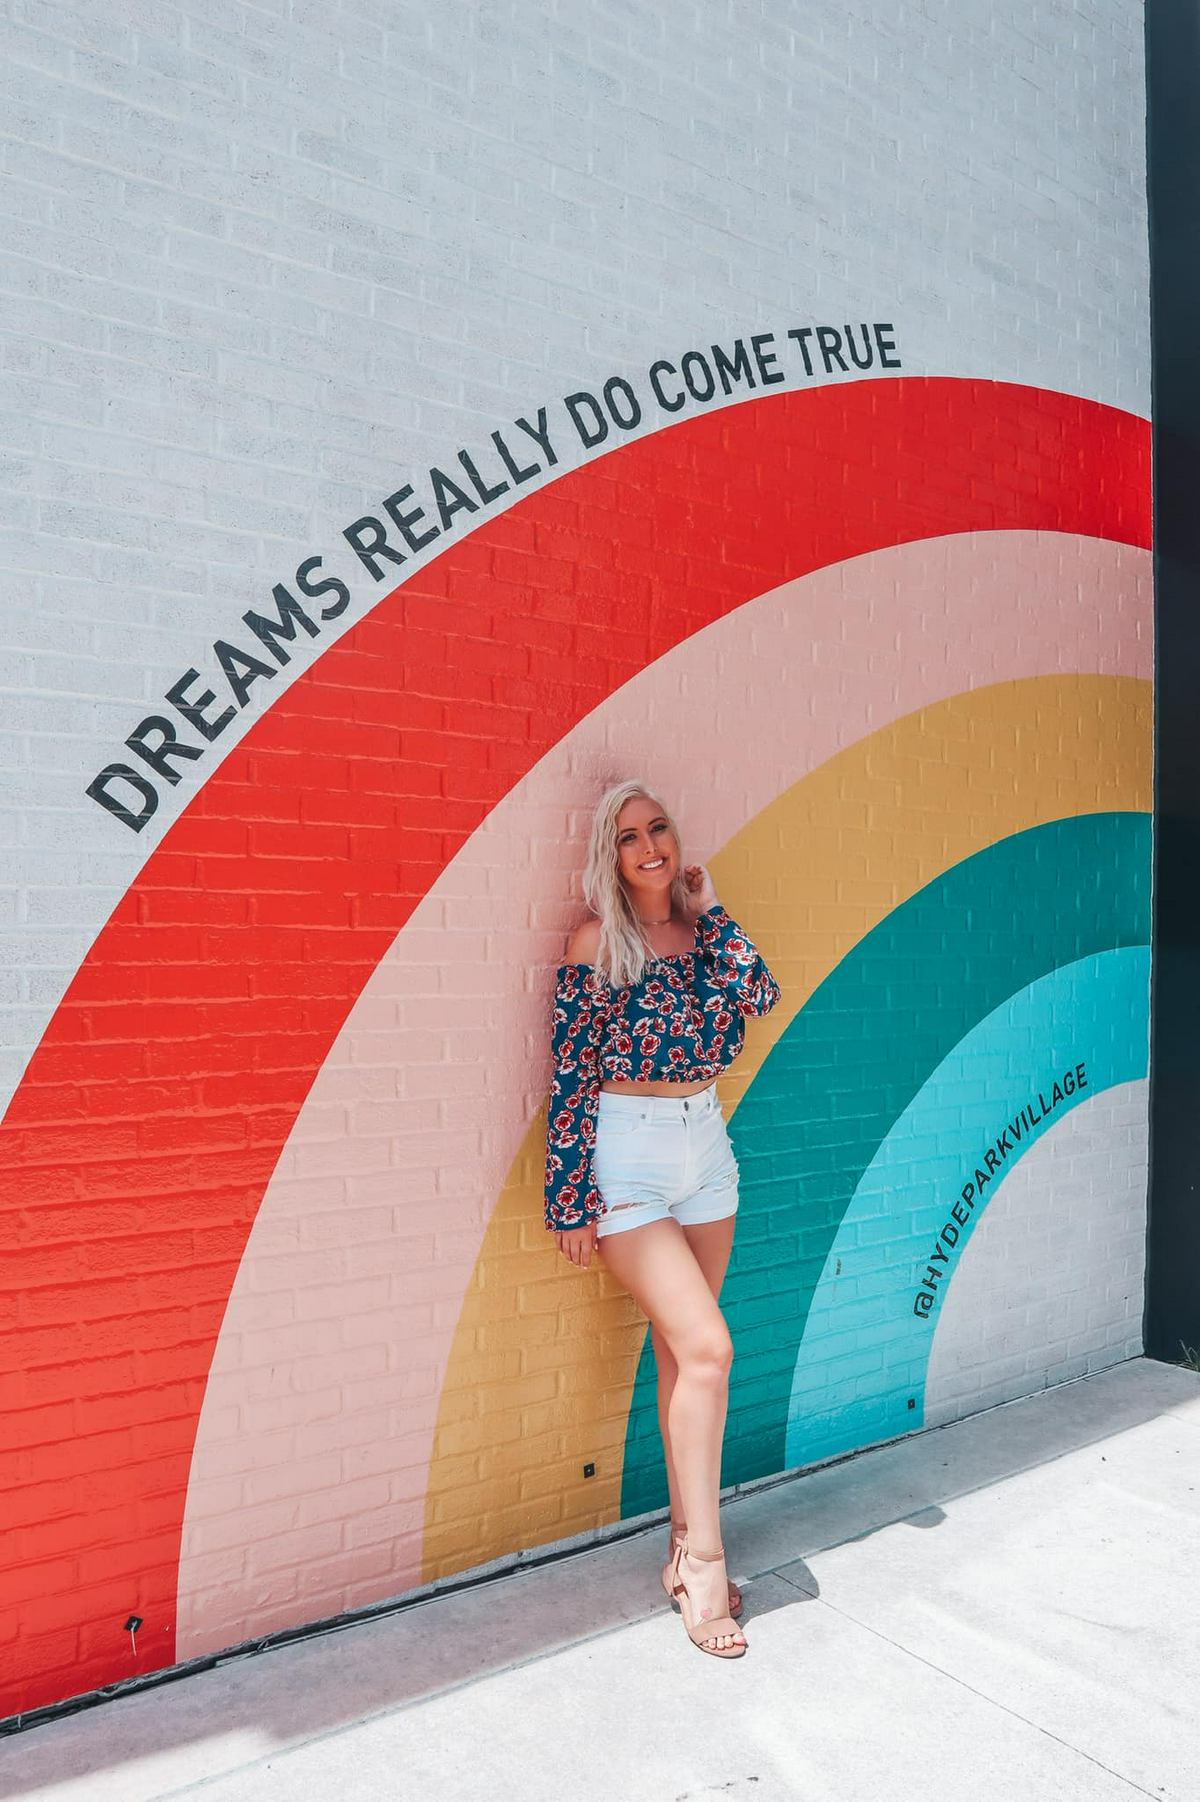 "dreams really do come true" mural in Hyde Park Tampa